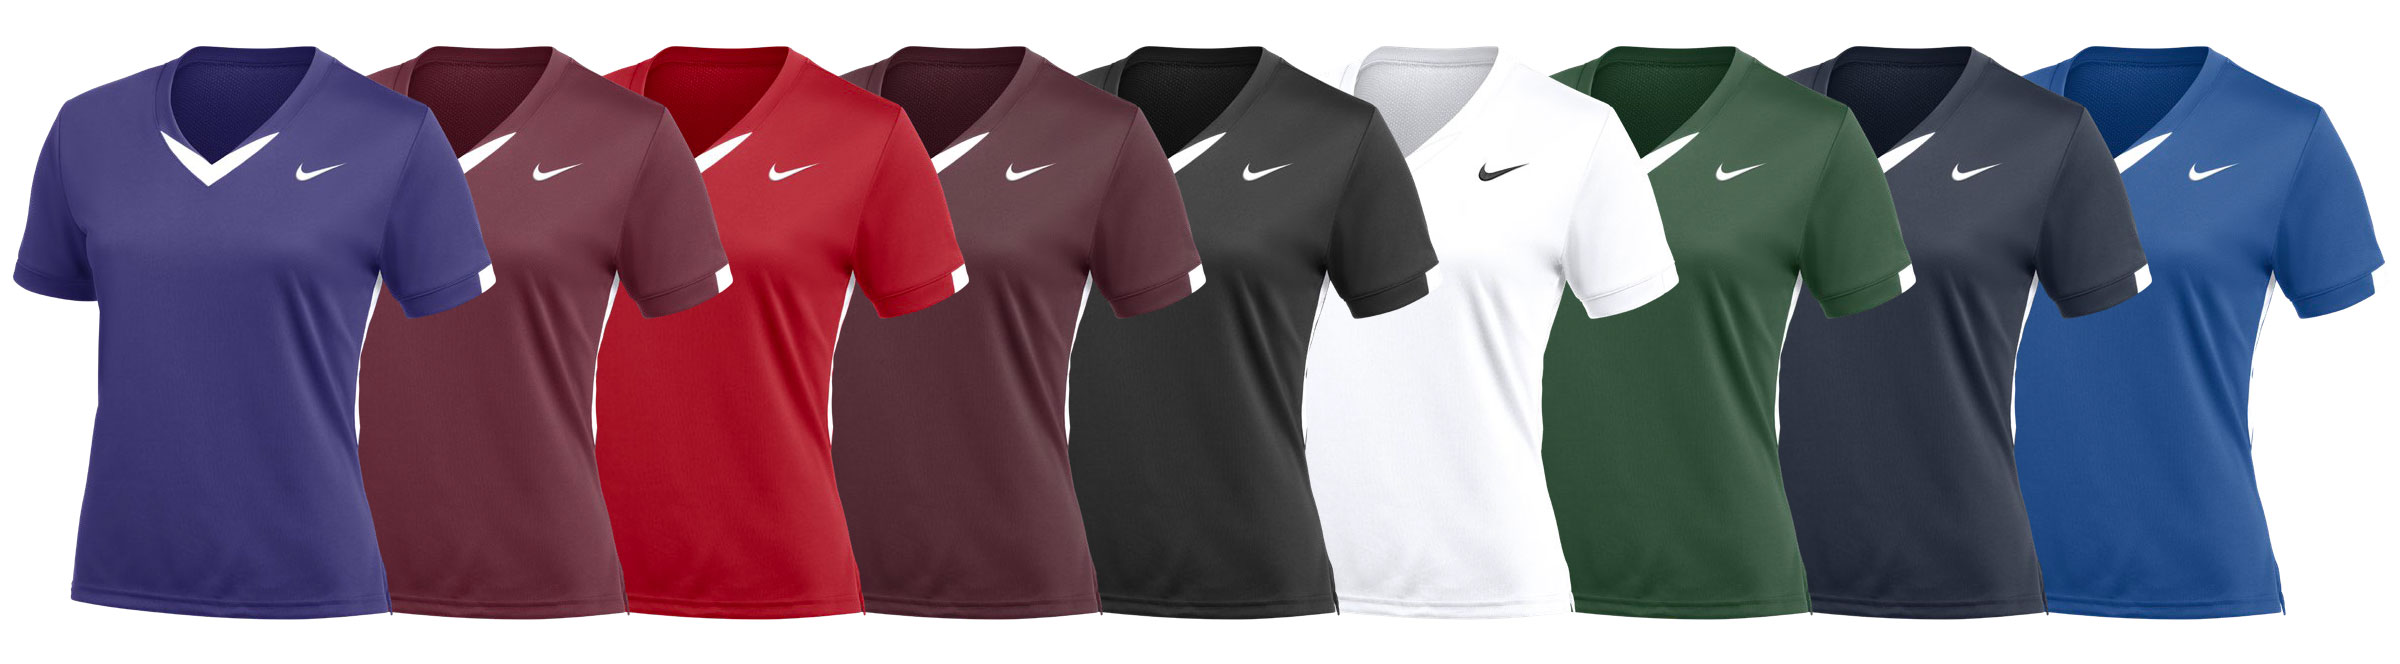 Nike Elite Custom Field Hockey Uniforms